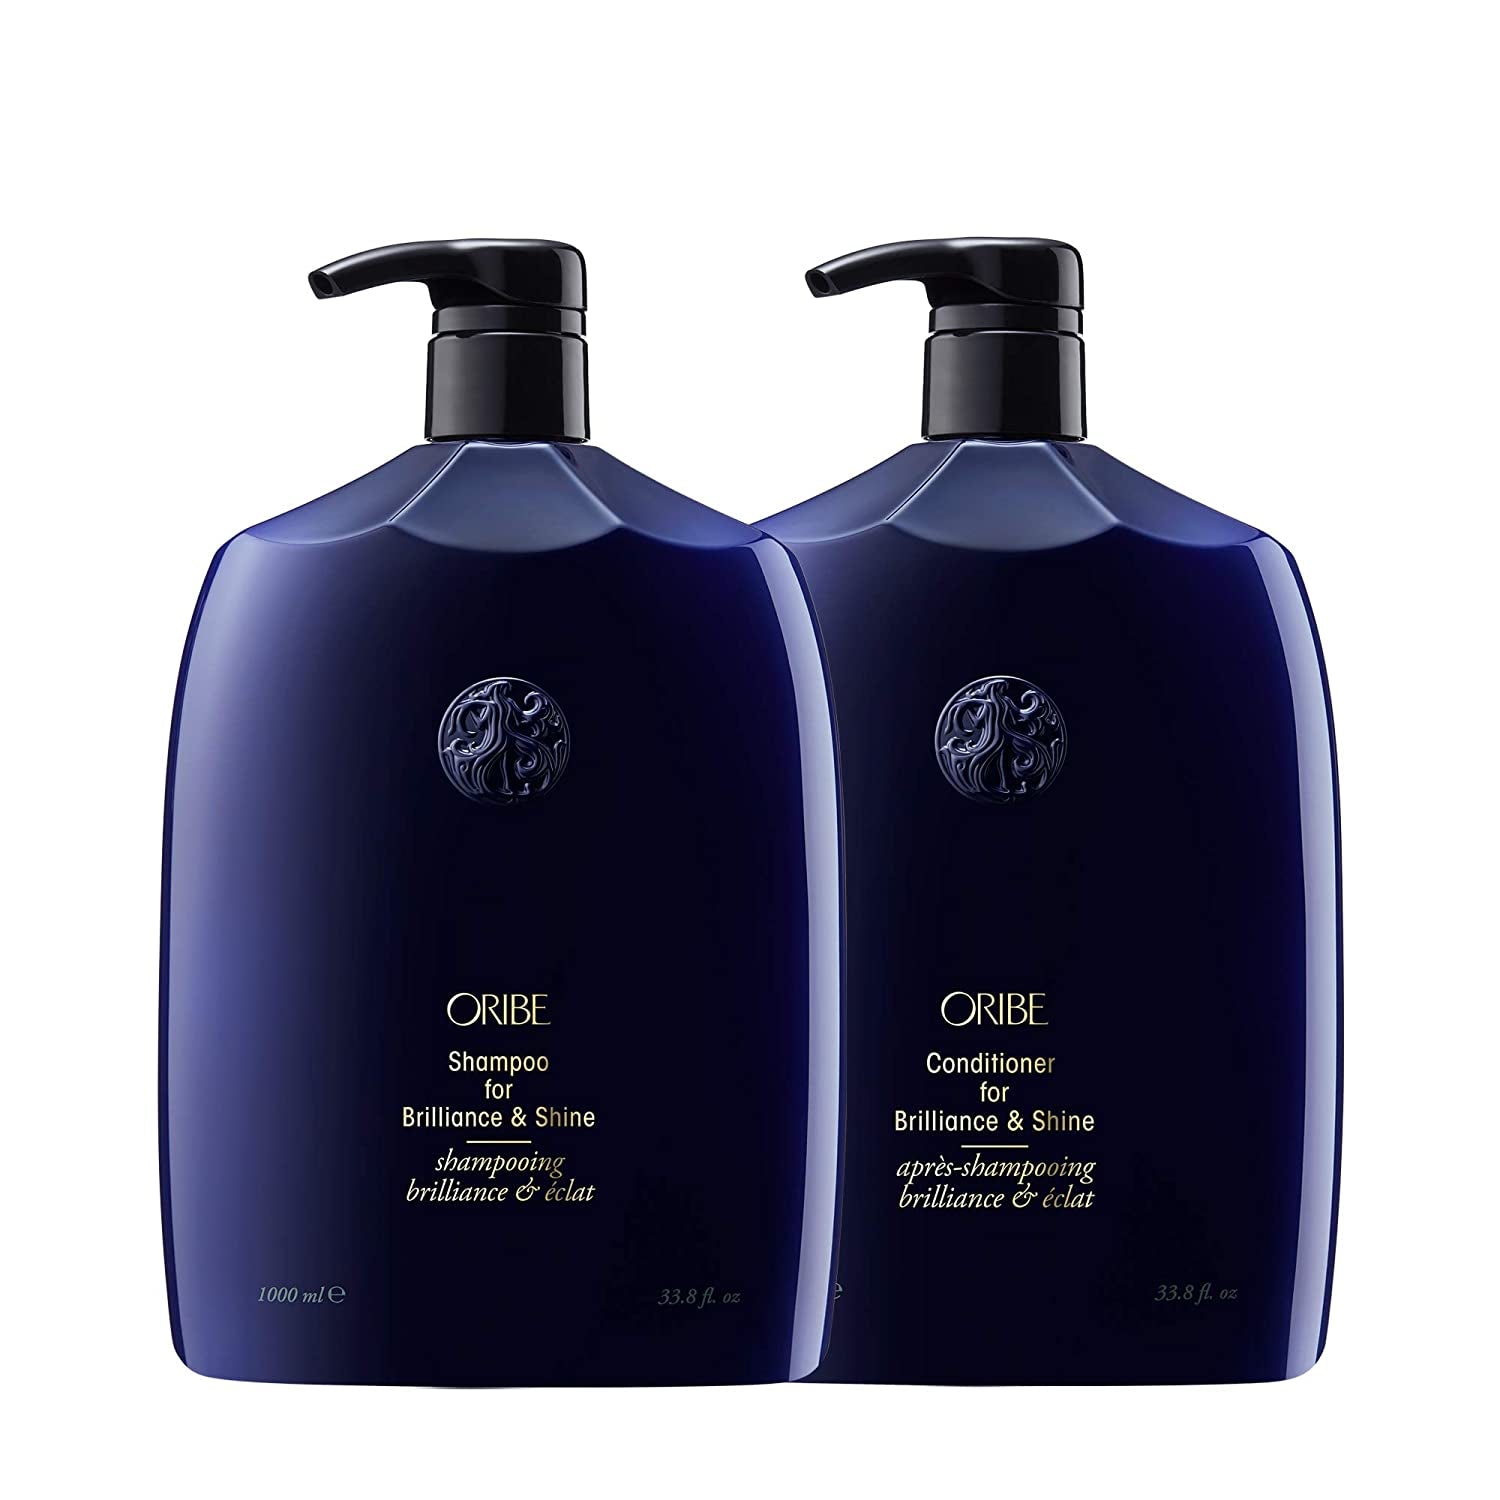 Oribe Shampoo and Conditioner for Brilliance & Shine Bundle